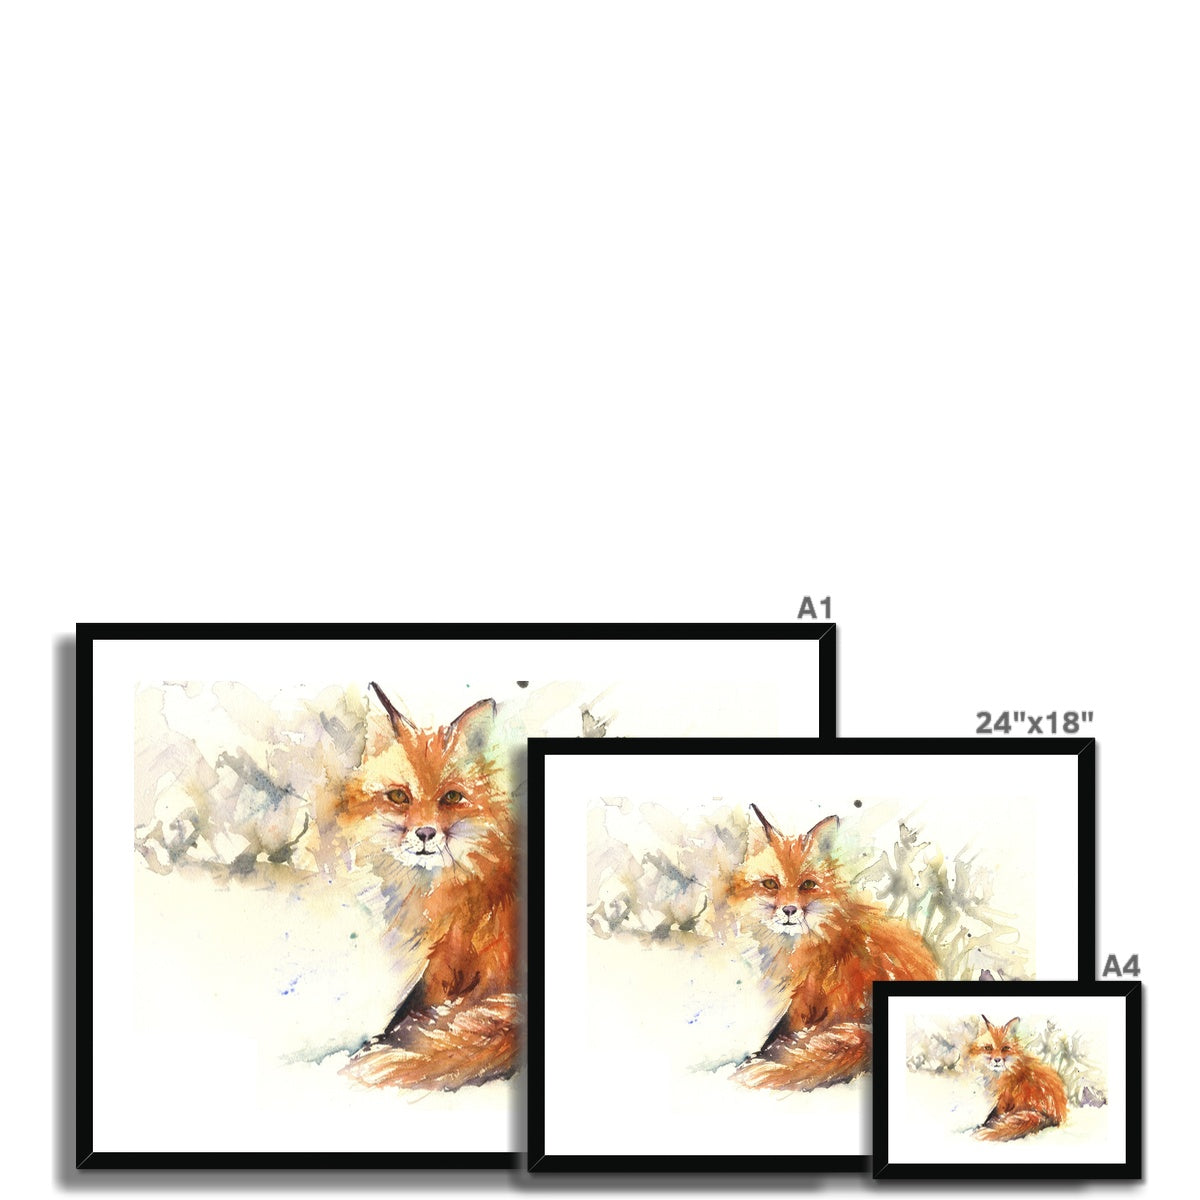 Lucas Framed & Mounted Print - Jen Buckley Art limited edition animal art prints